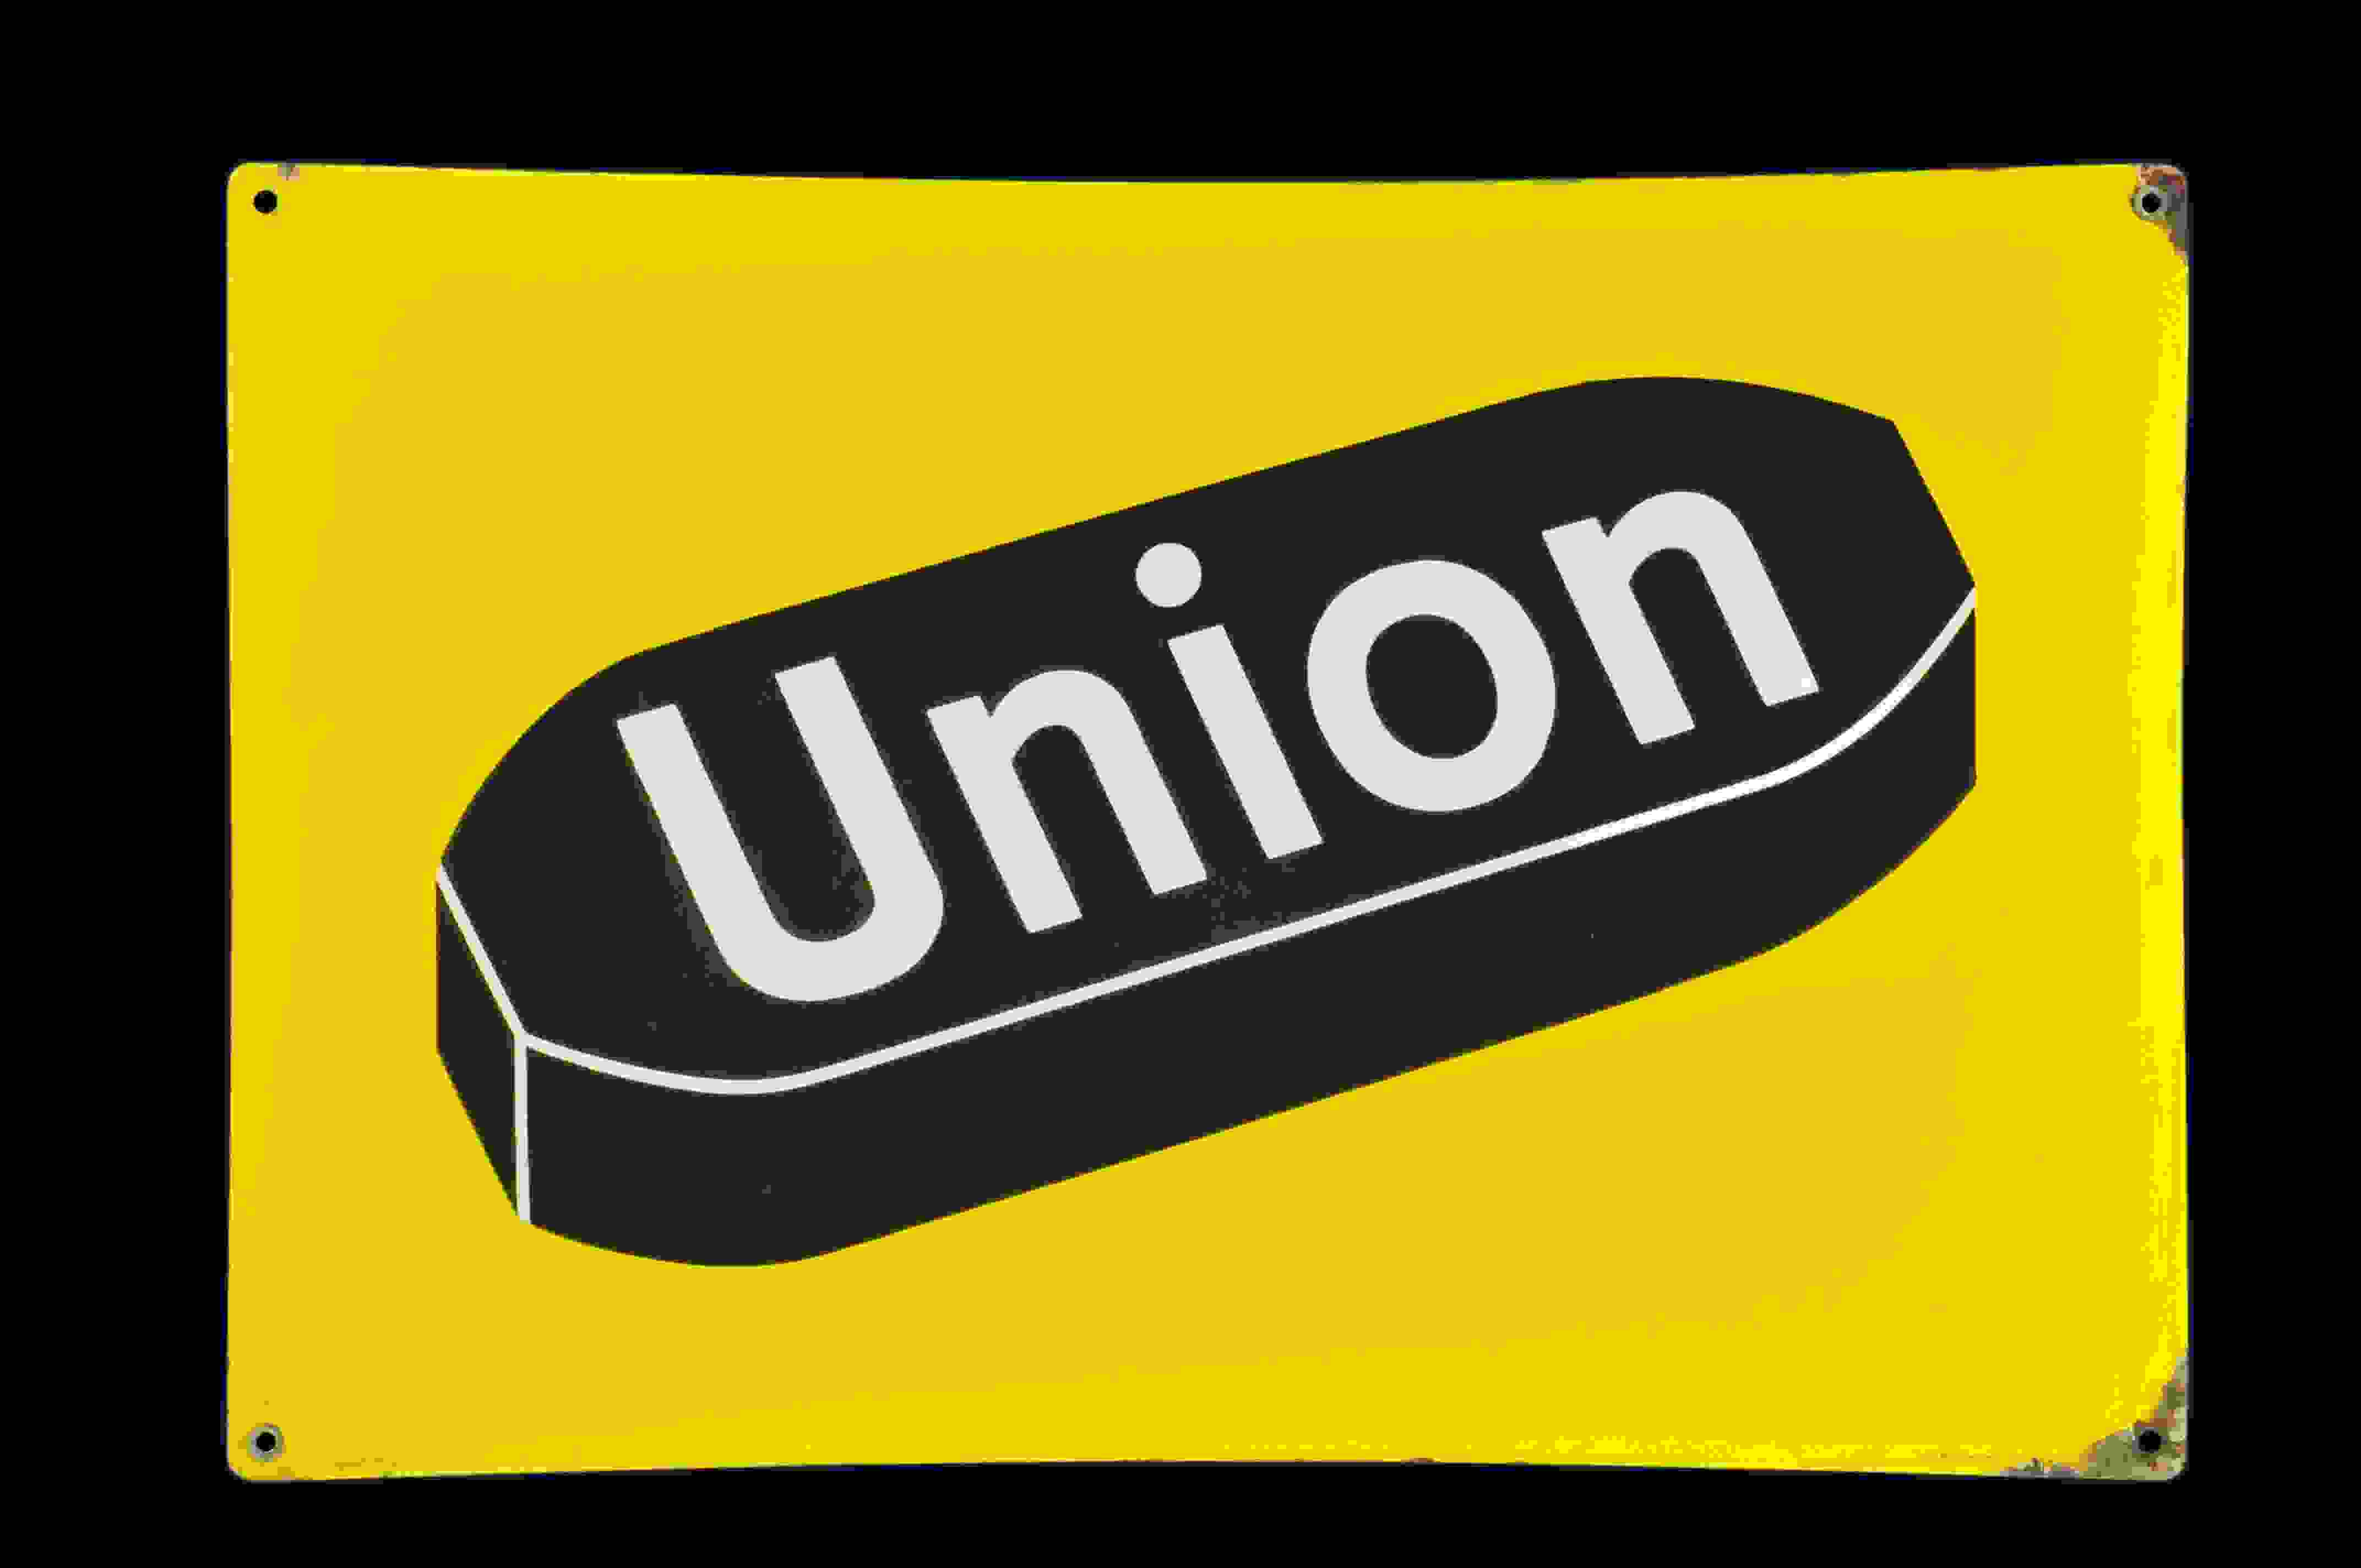 Union 